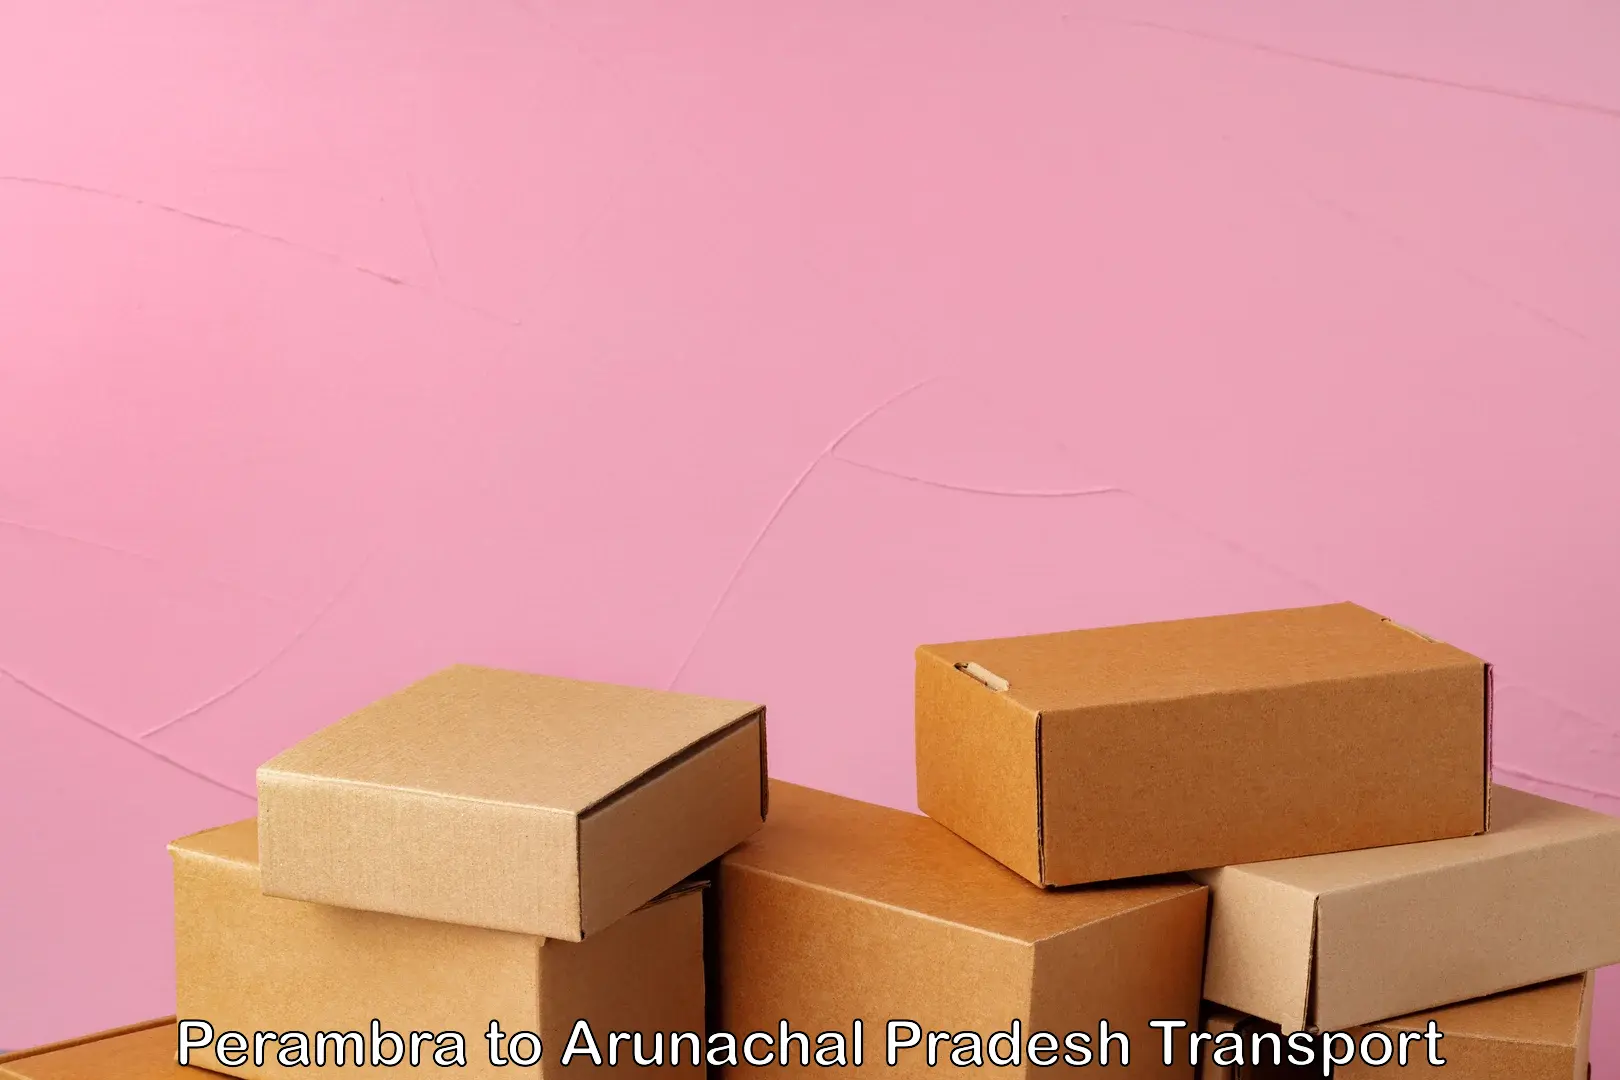 Truck transport companies in India Perambra to Arunachal Pradesh